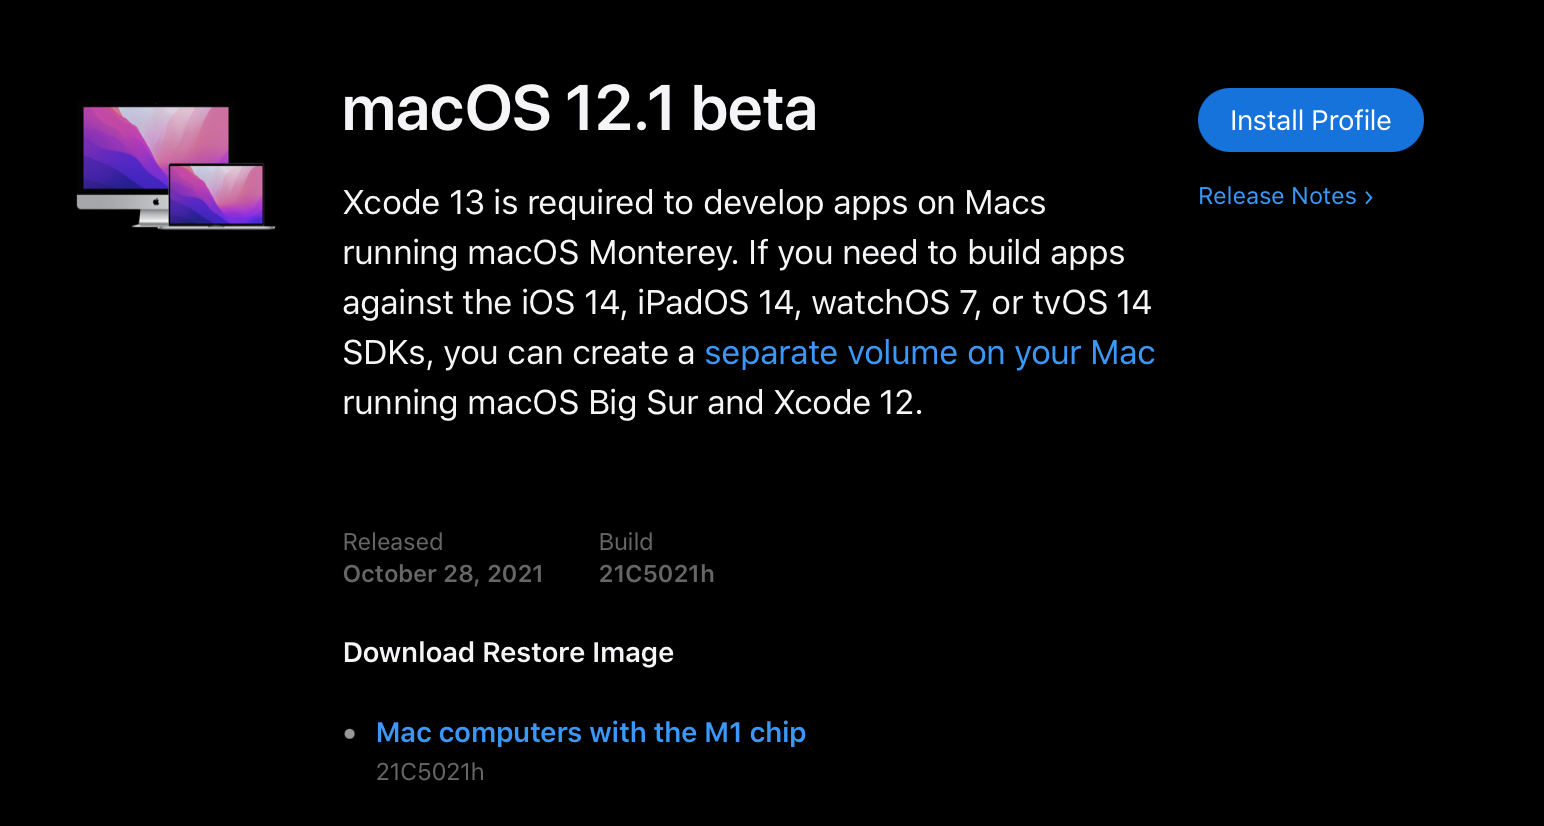 download the last version for apple Catsxp 3.9.6